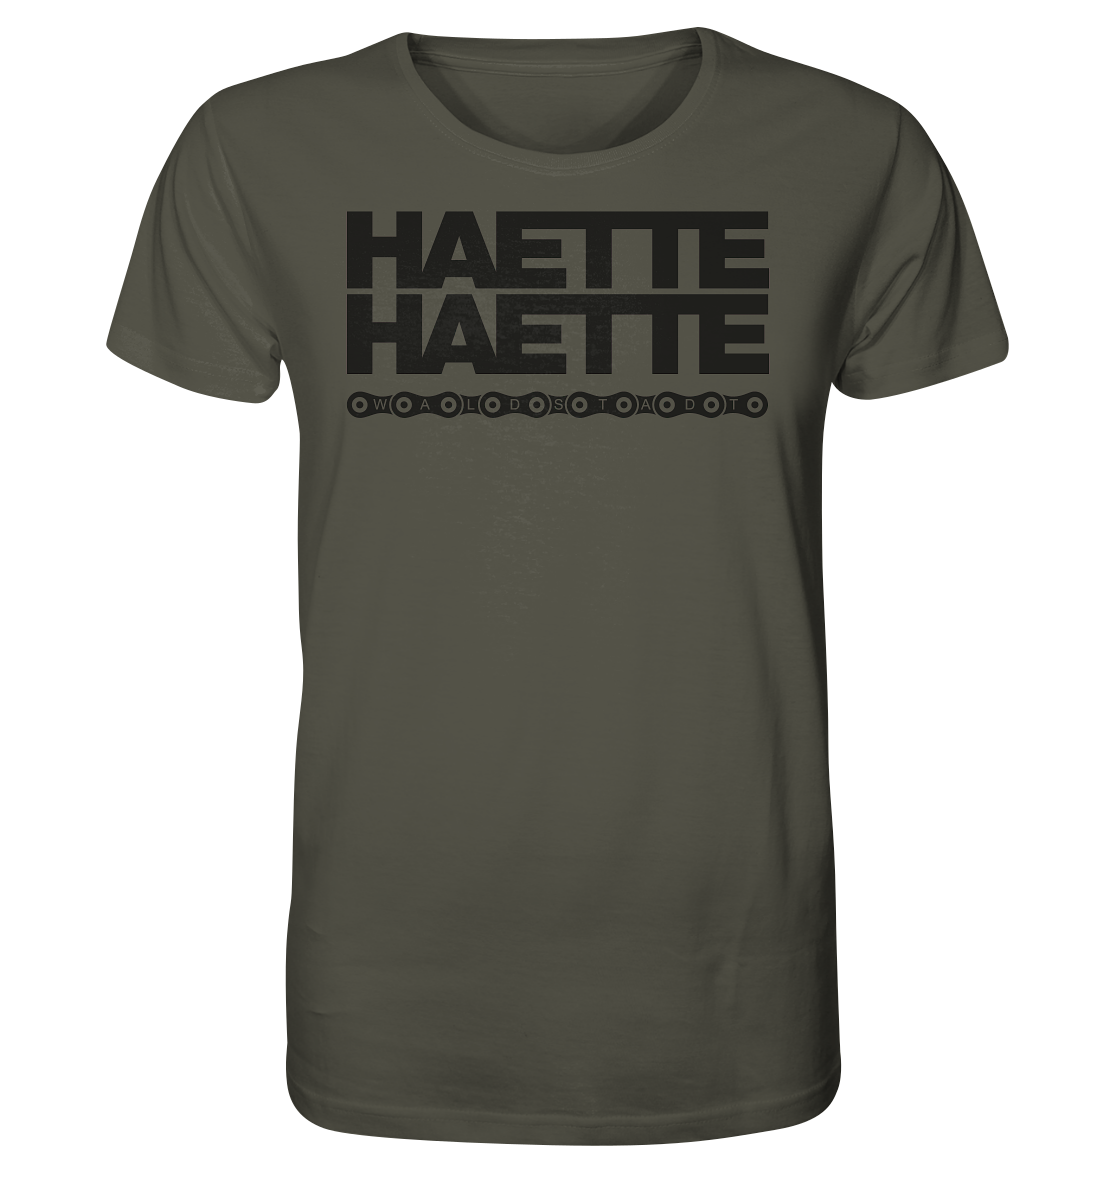 Haette Haette Fahrradkette b - Organic Shirt